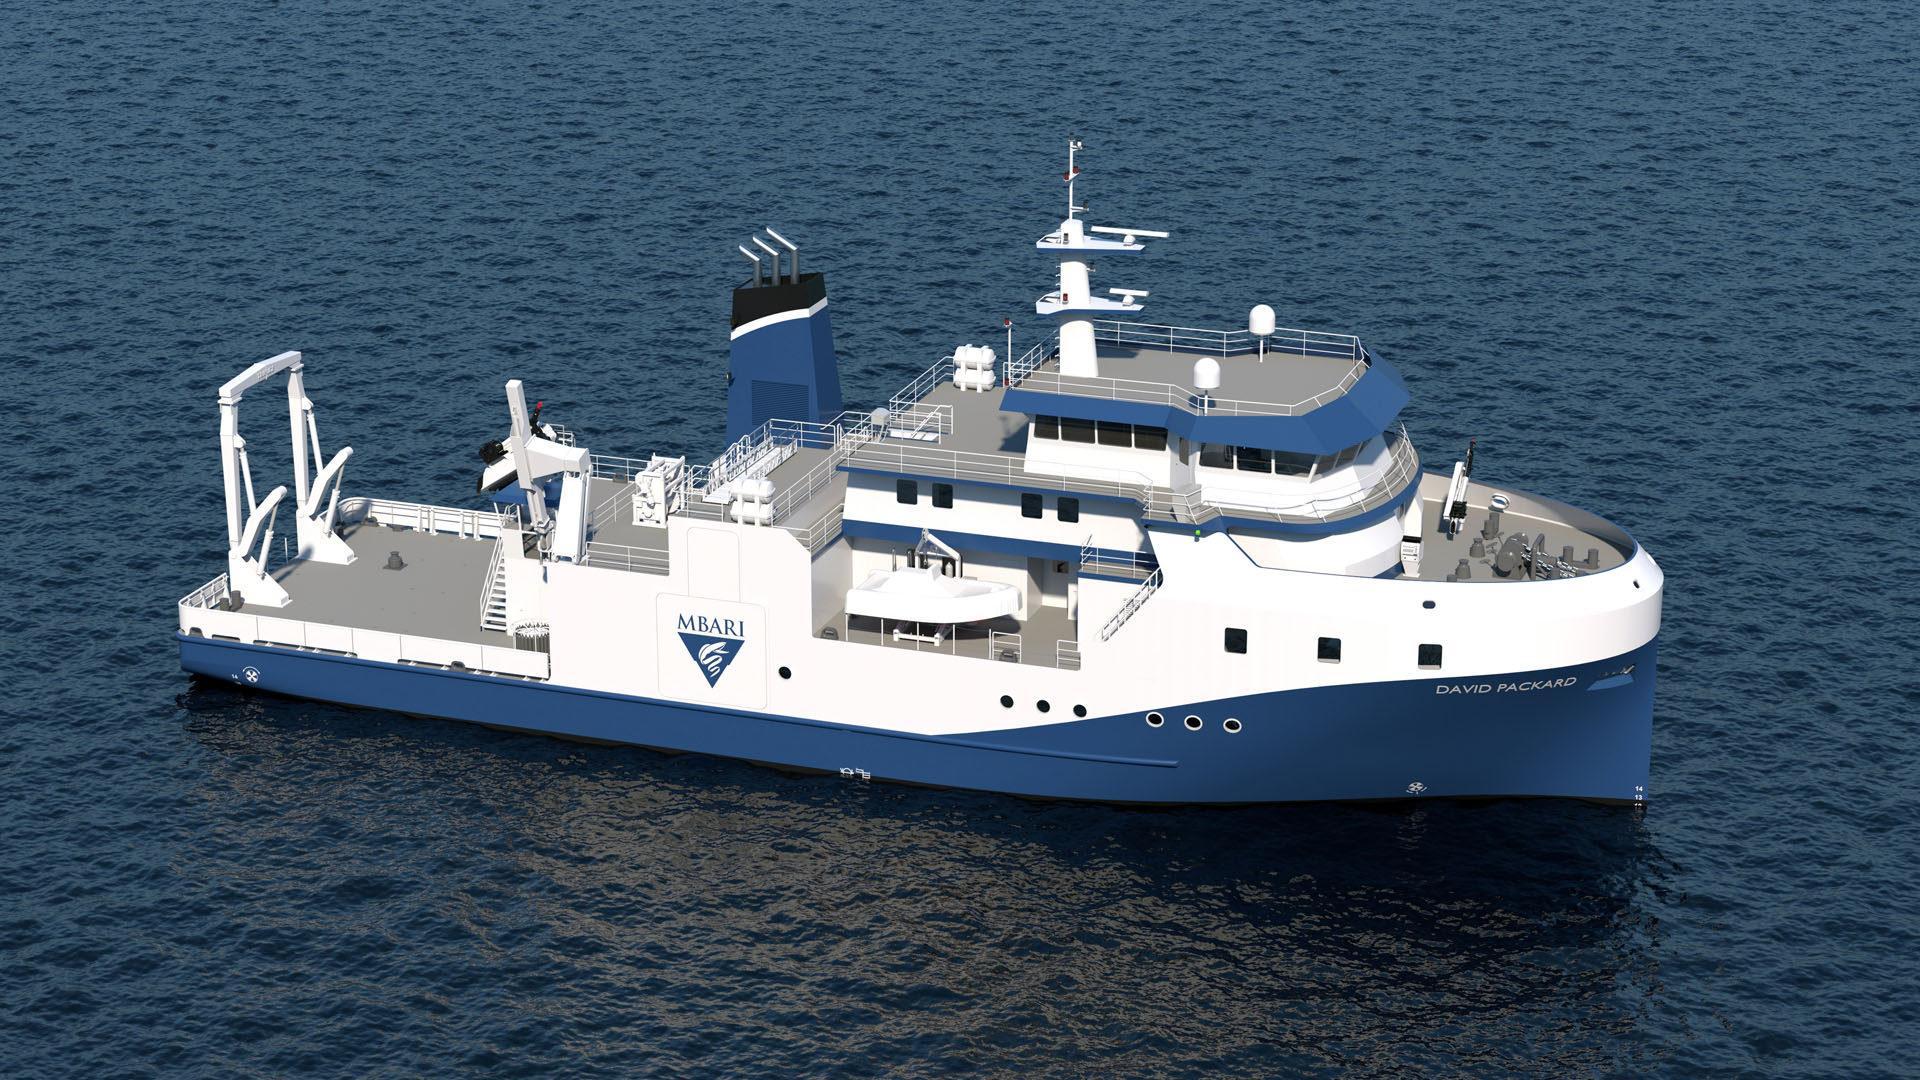 Freire Shipyard for Monterey Bay Aquarium Research Institute